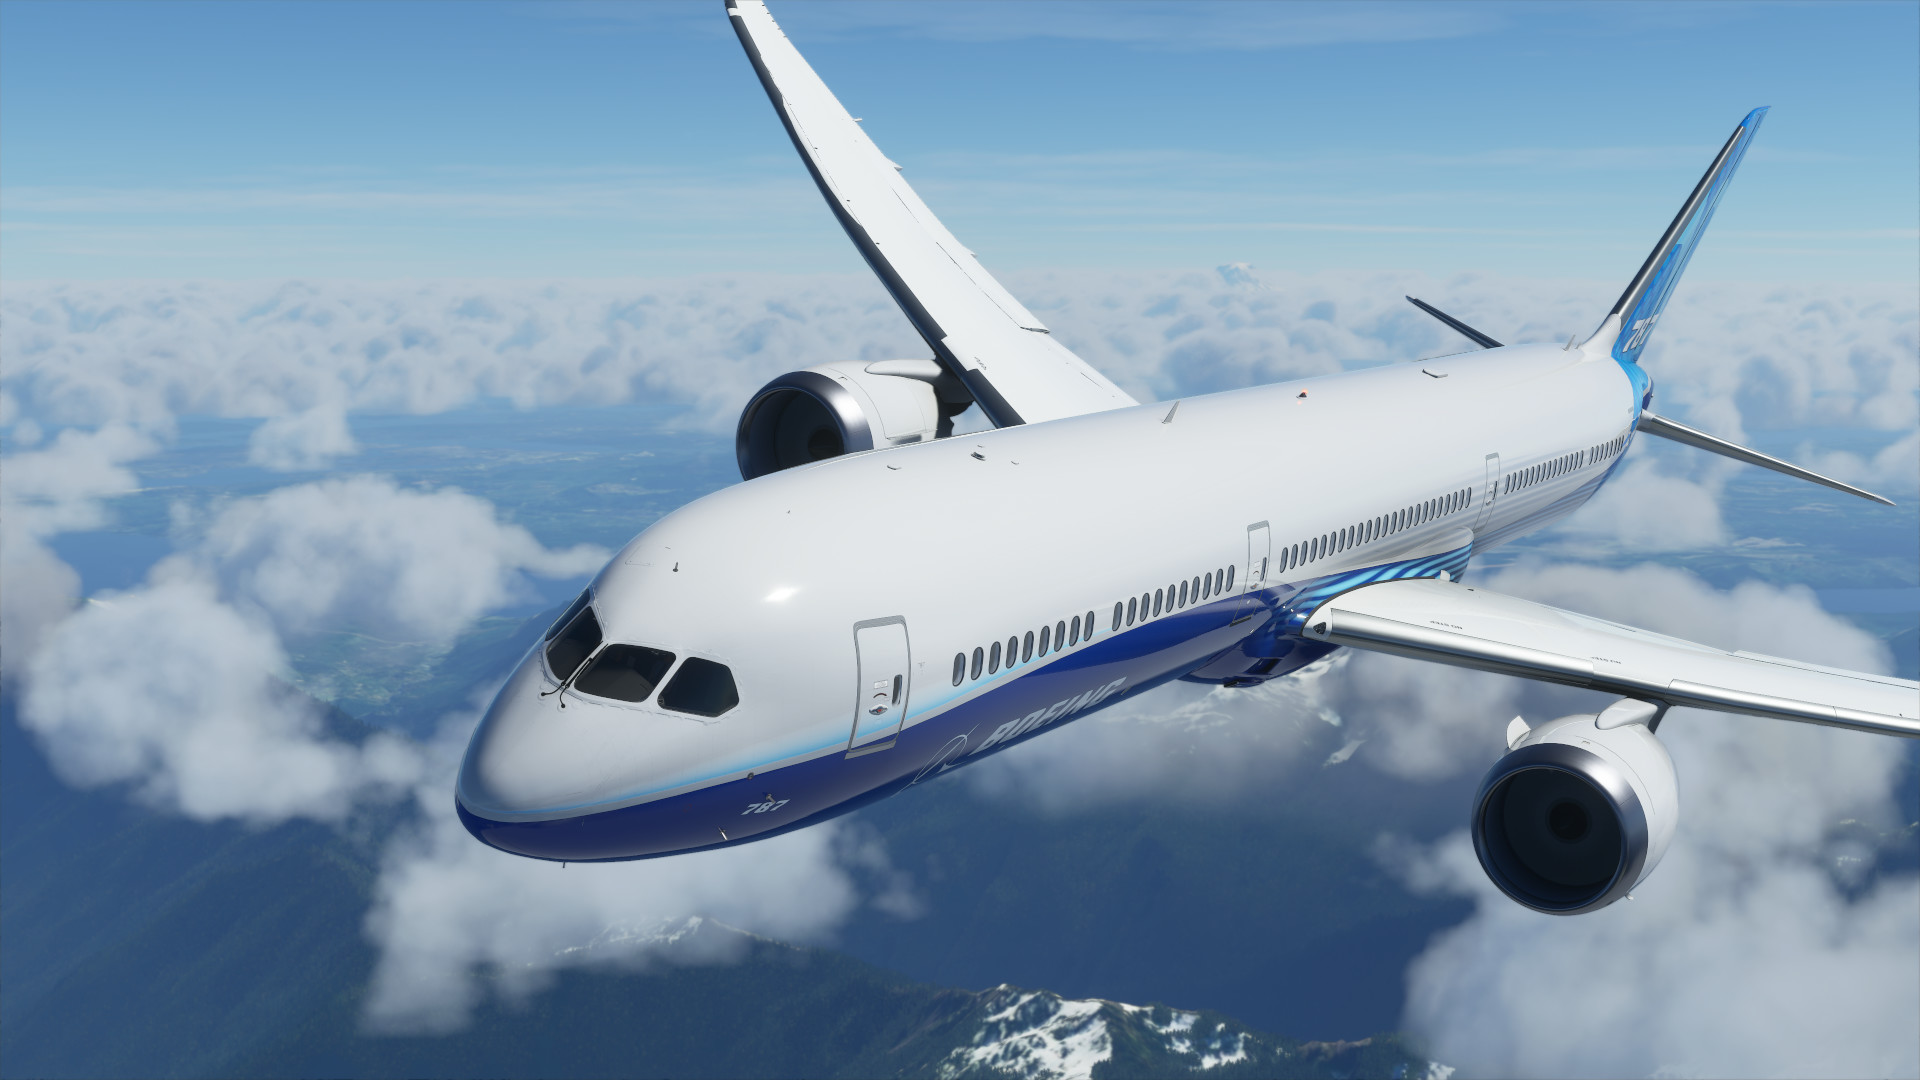 Microsoft Flight Simulator Mobile - Microsoft Flight Simulator